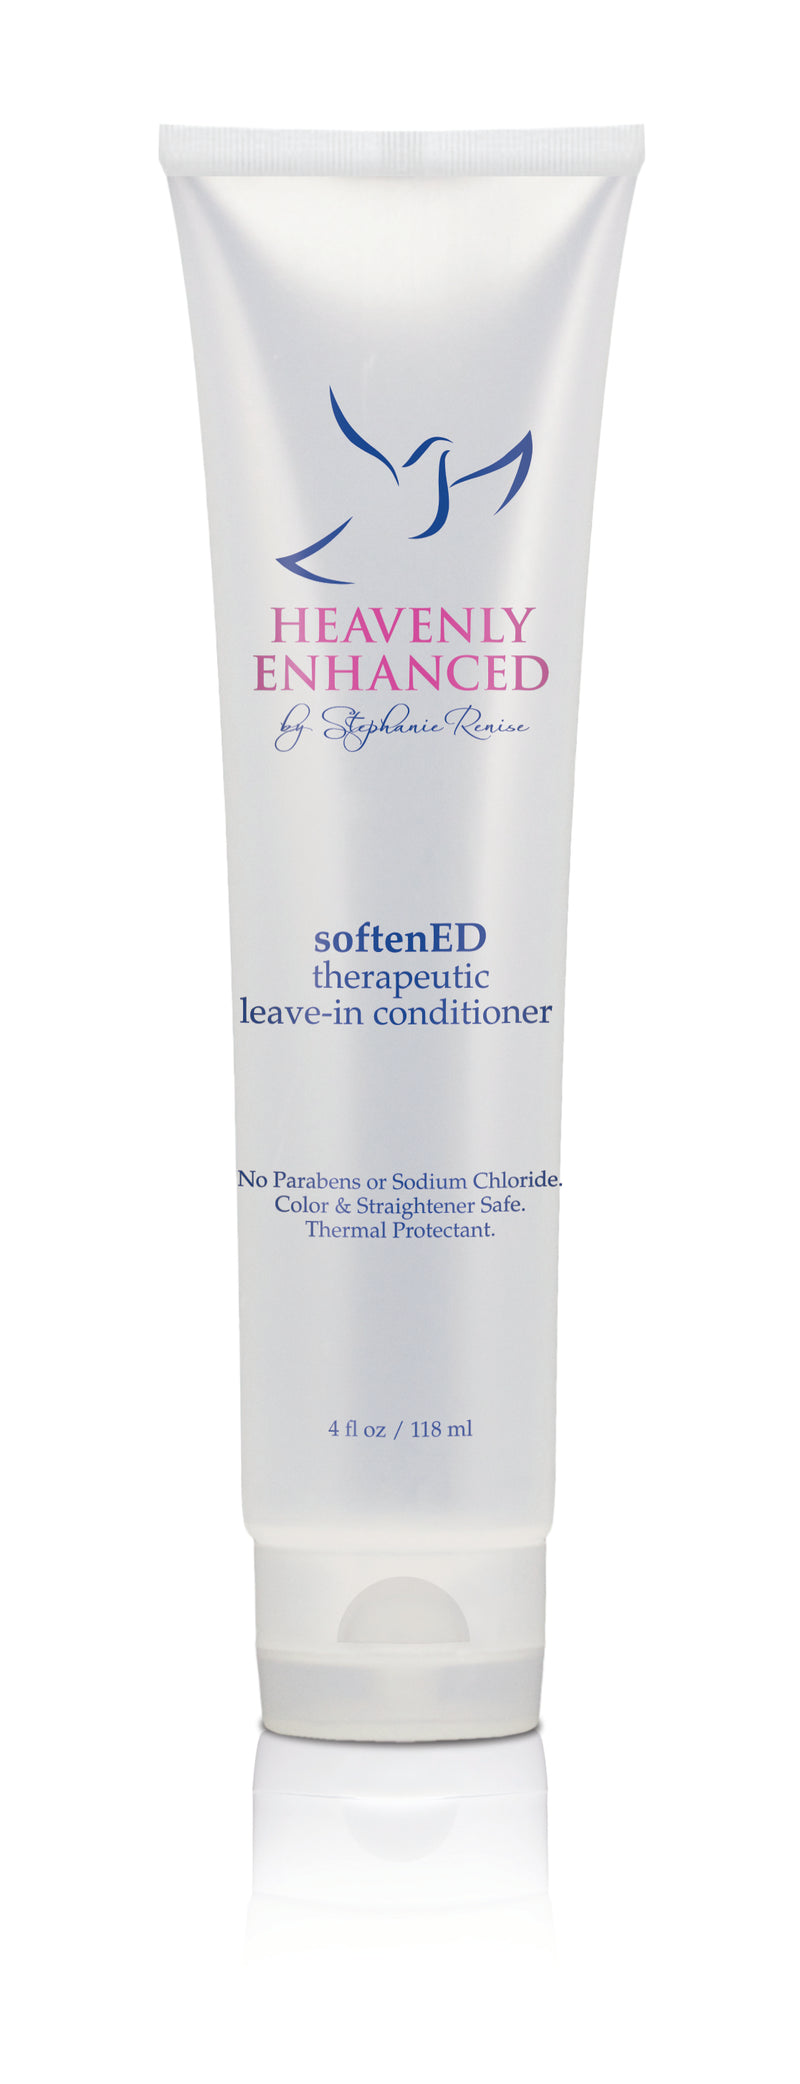 softenED - therapeutic leave-in conditioner & moisturizer